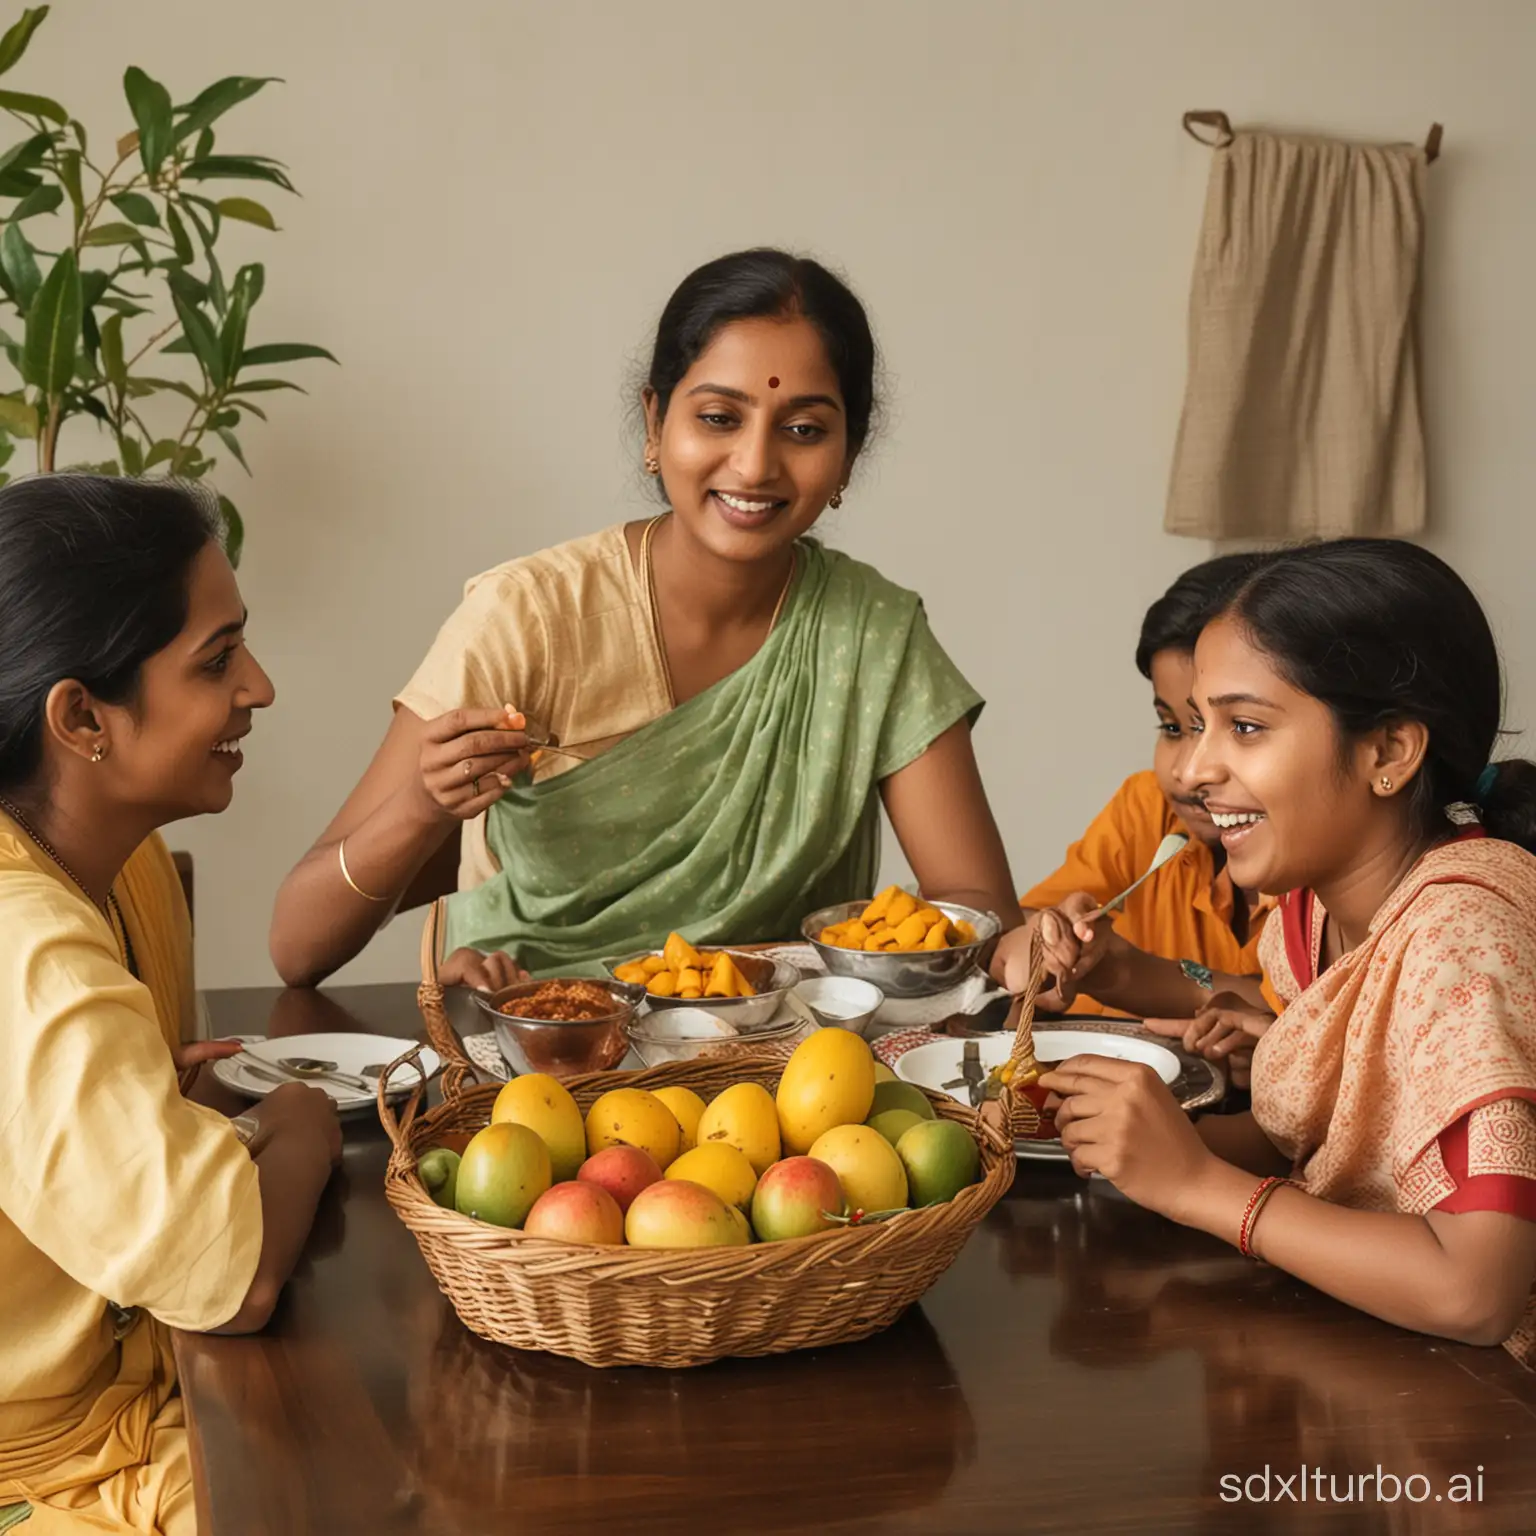 South-Indian-Family-Enjoying-Mangoes-Around-Dining-Table